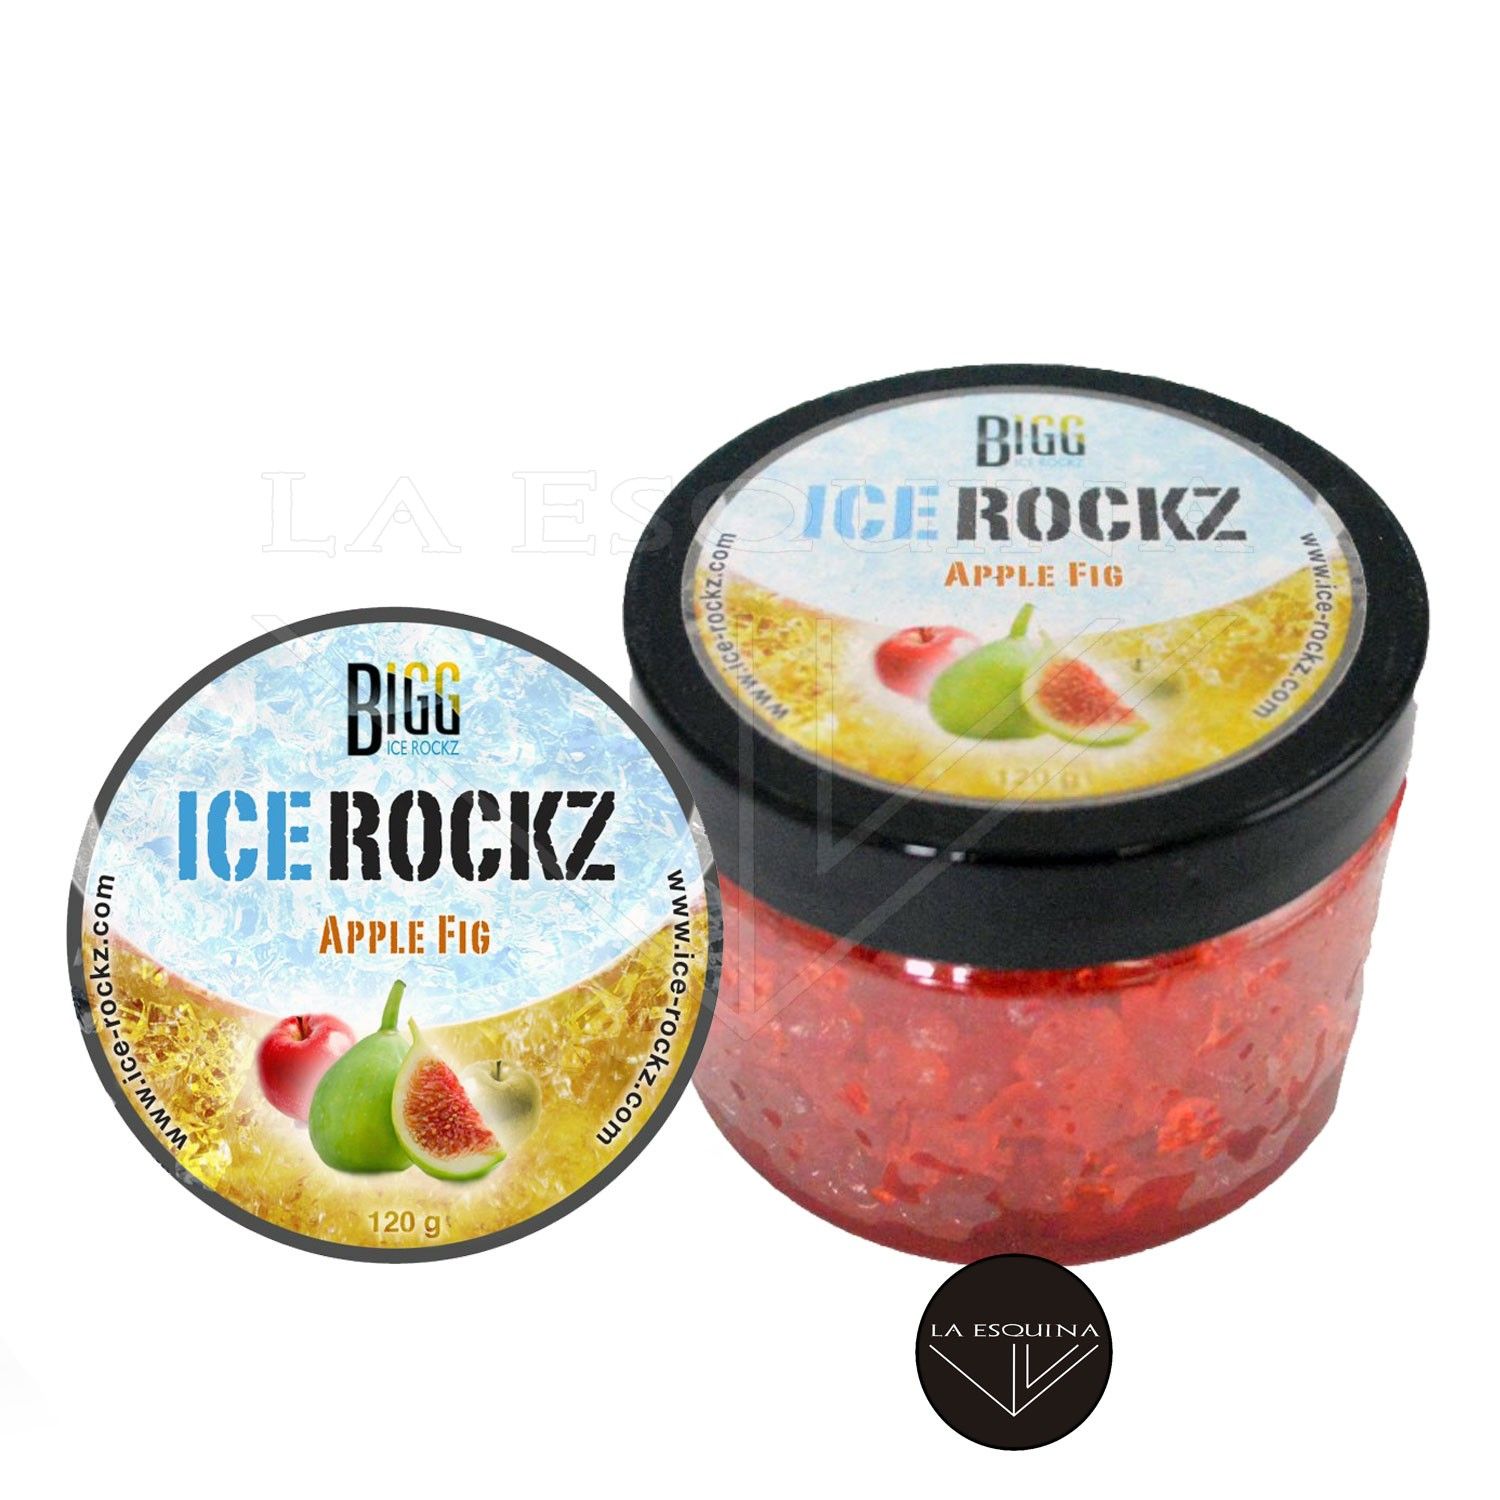 Gel Rock de Cachimba BIGG ICE ROCKZ – 120 g. – Apple Fig